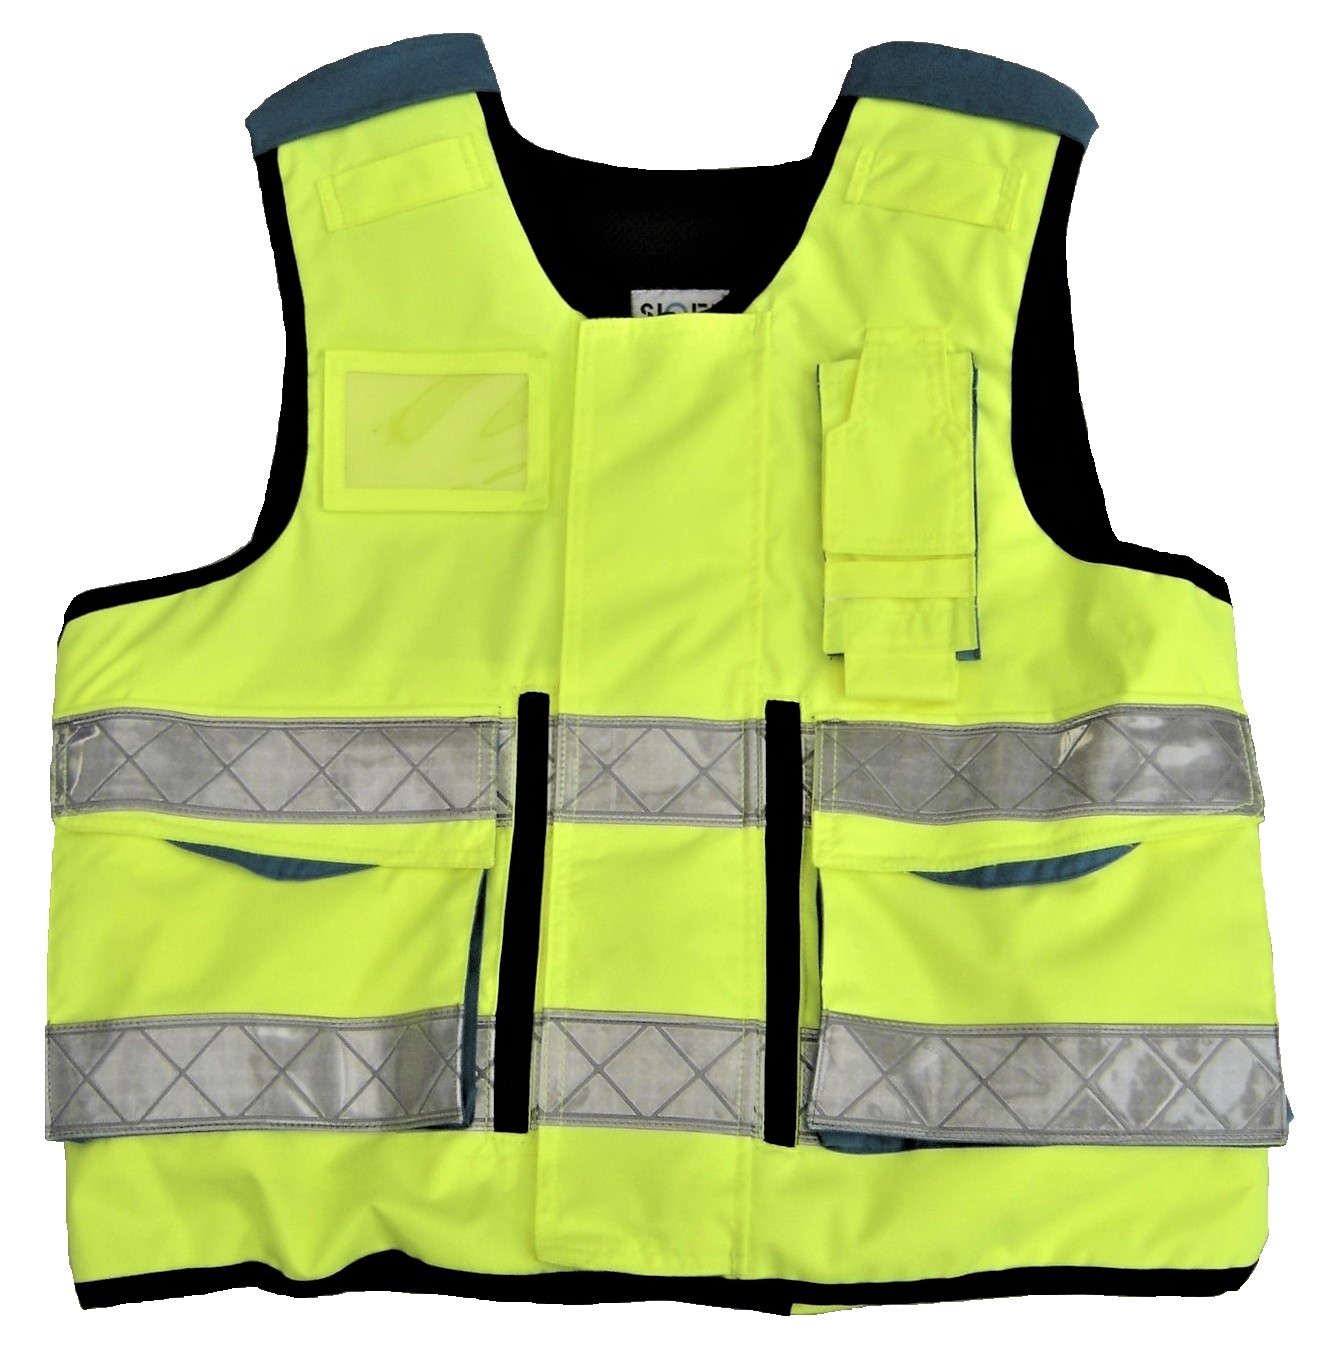 Stab resistant vest K1 ambulance yellow security economic